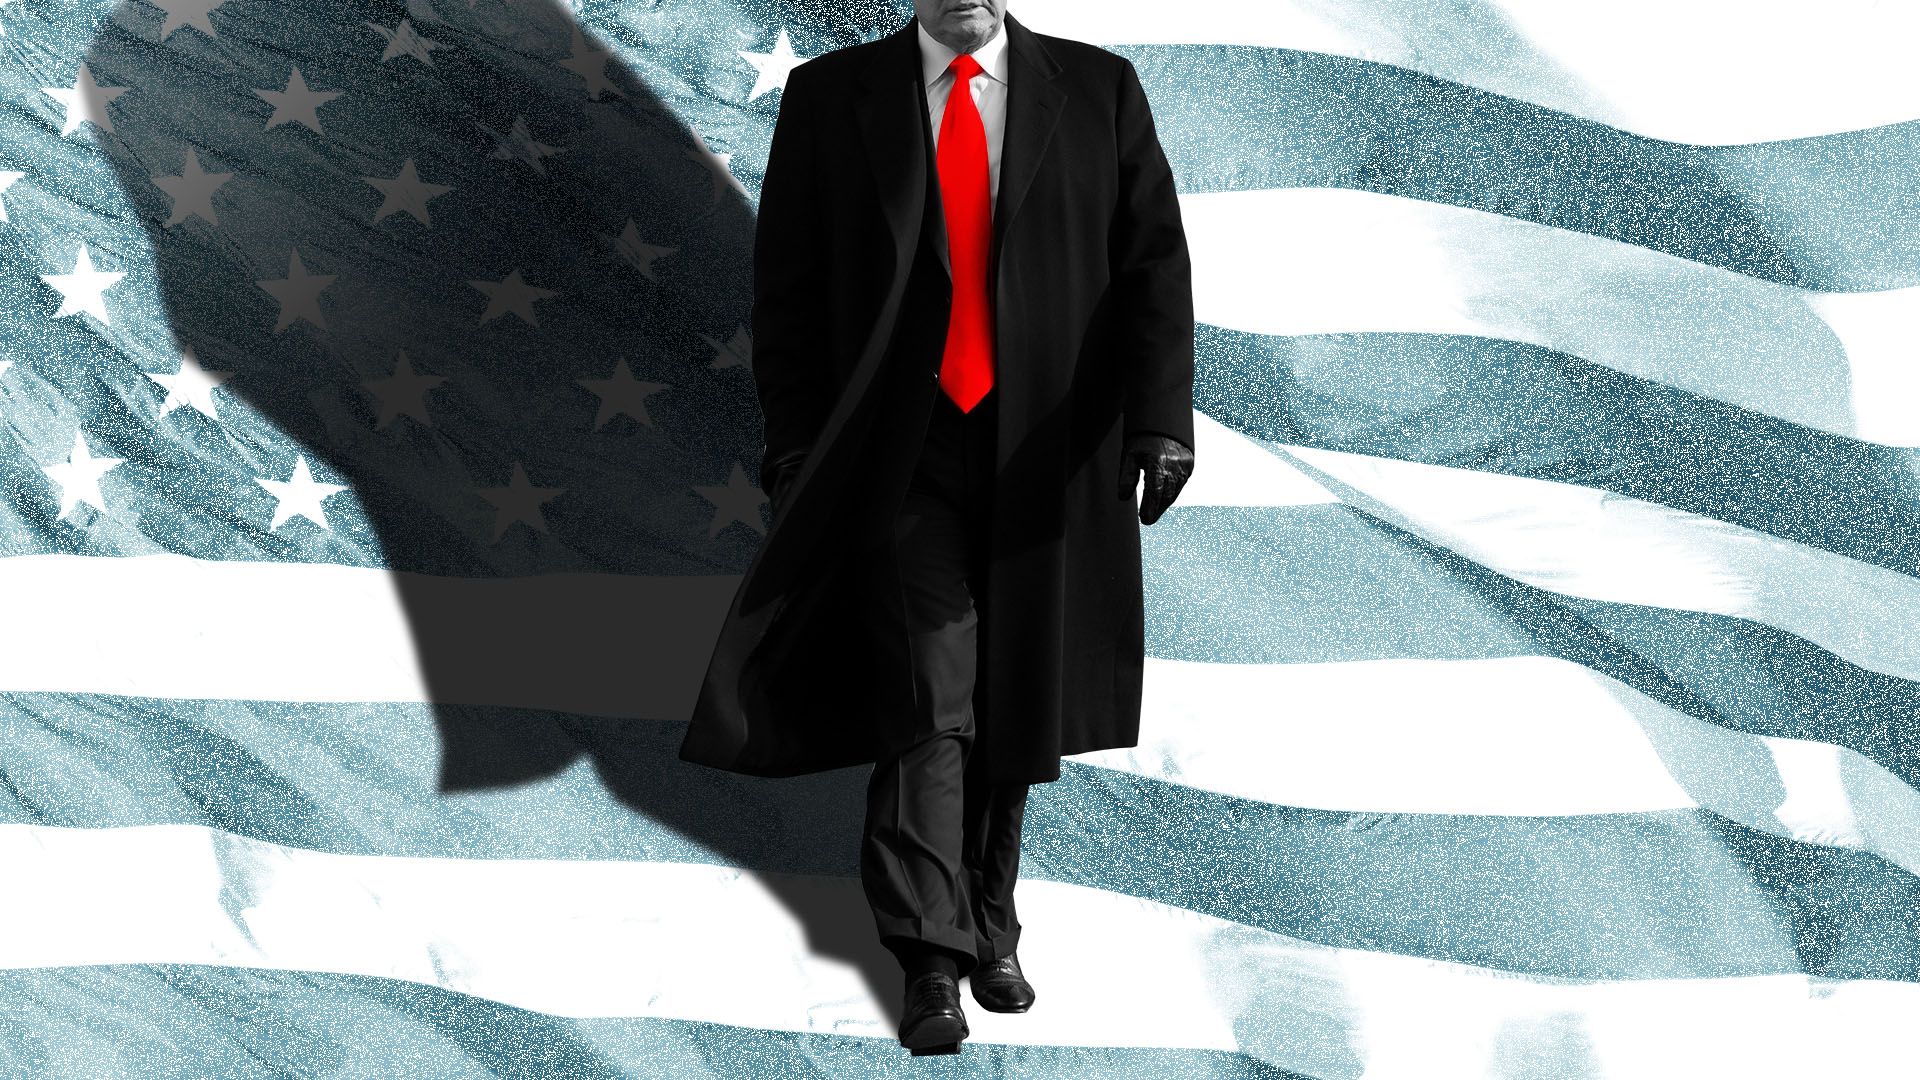 Illustration of President Trump casting shadow over U.S. flag